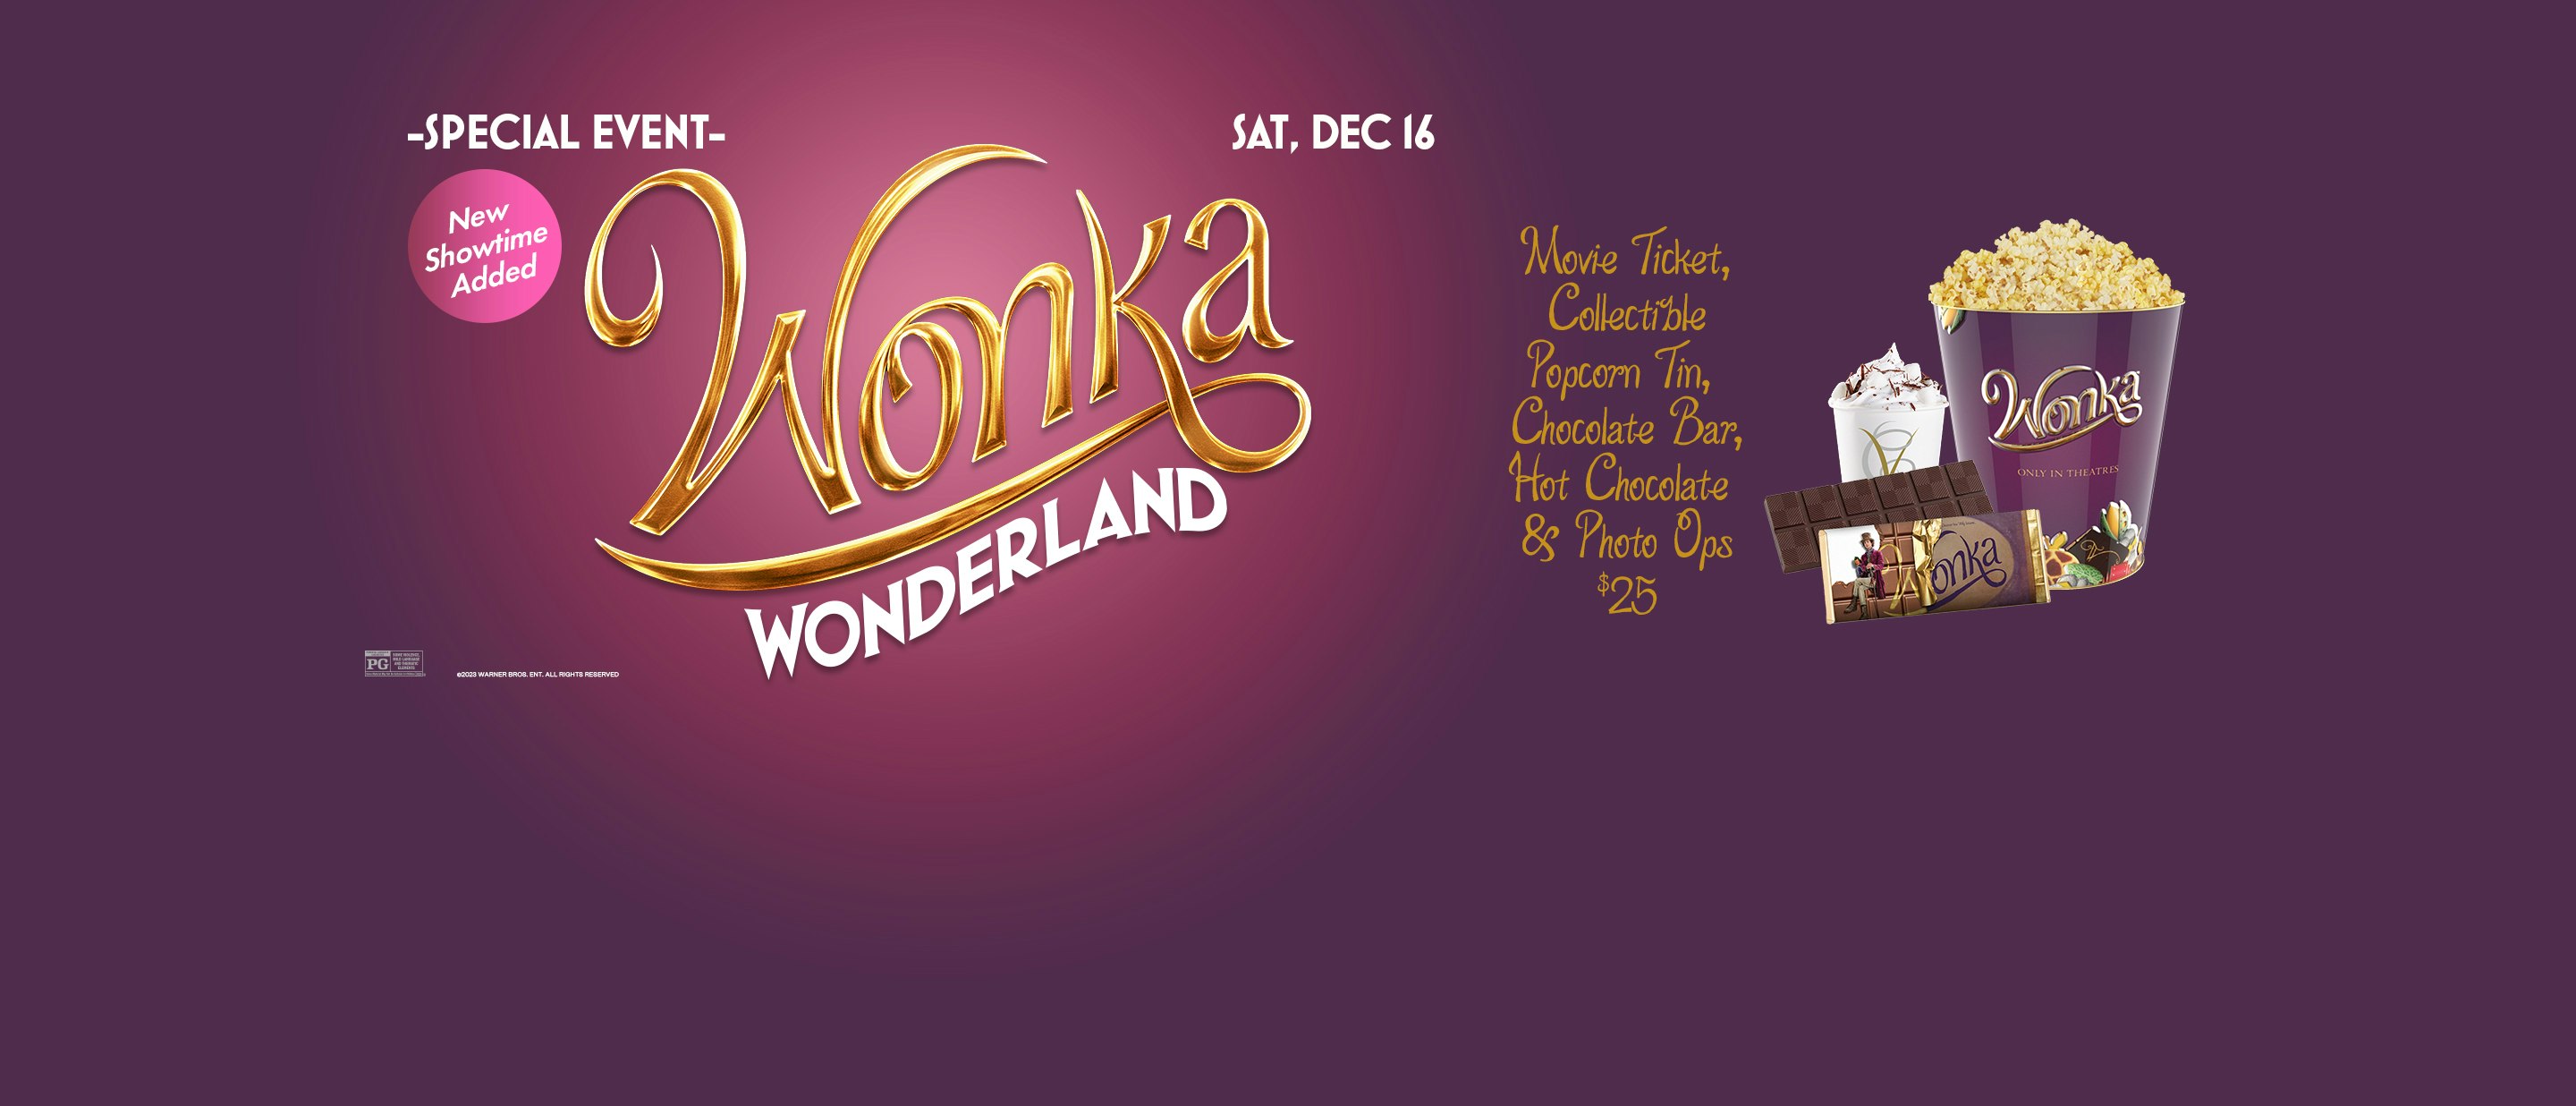 Wonka Wonderland